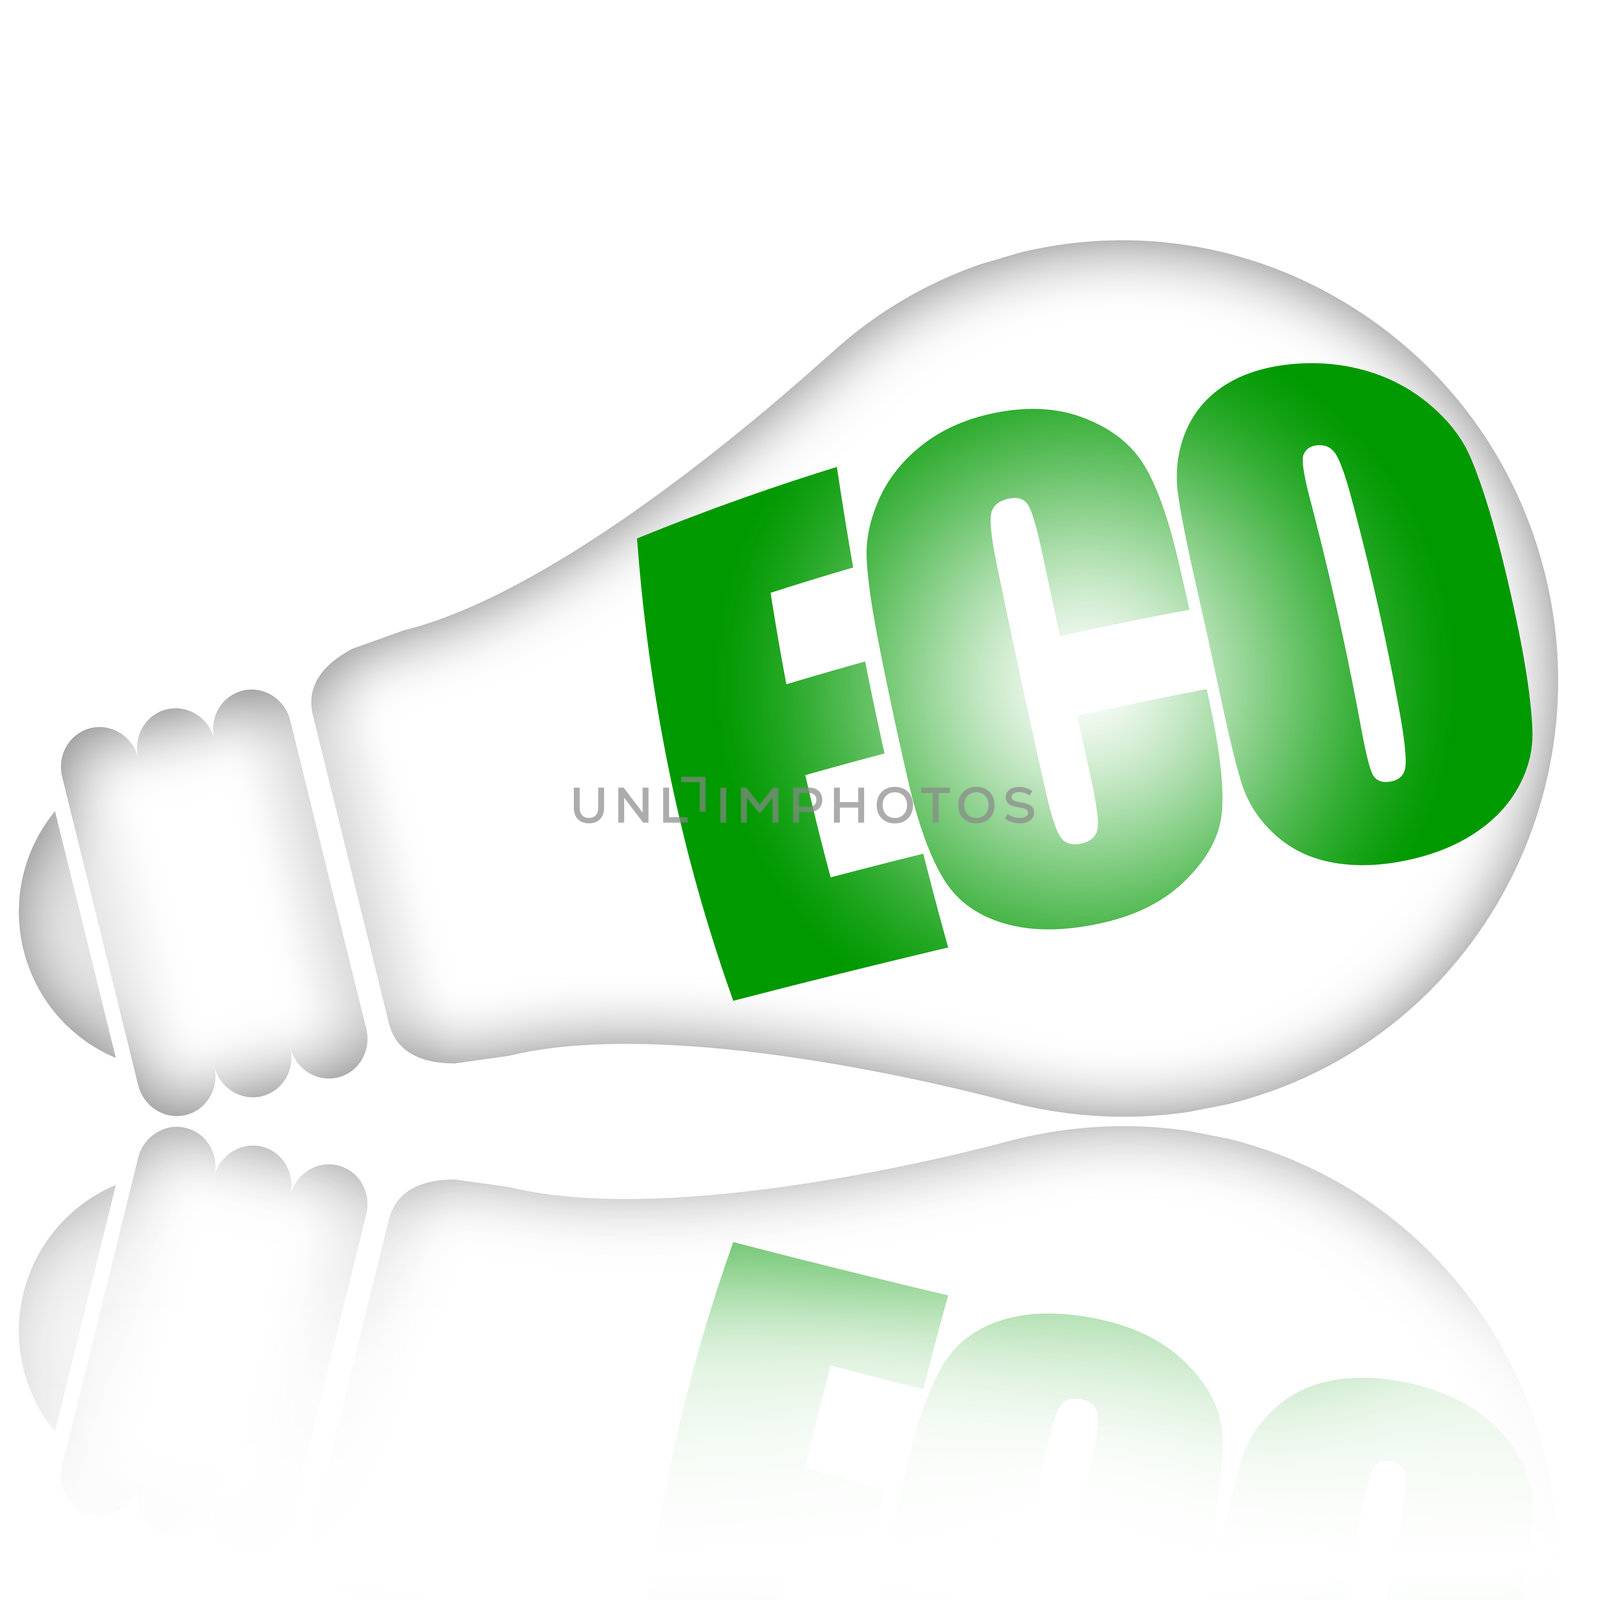 Energy saving eco lamp by Skovoroda